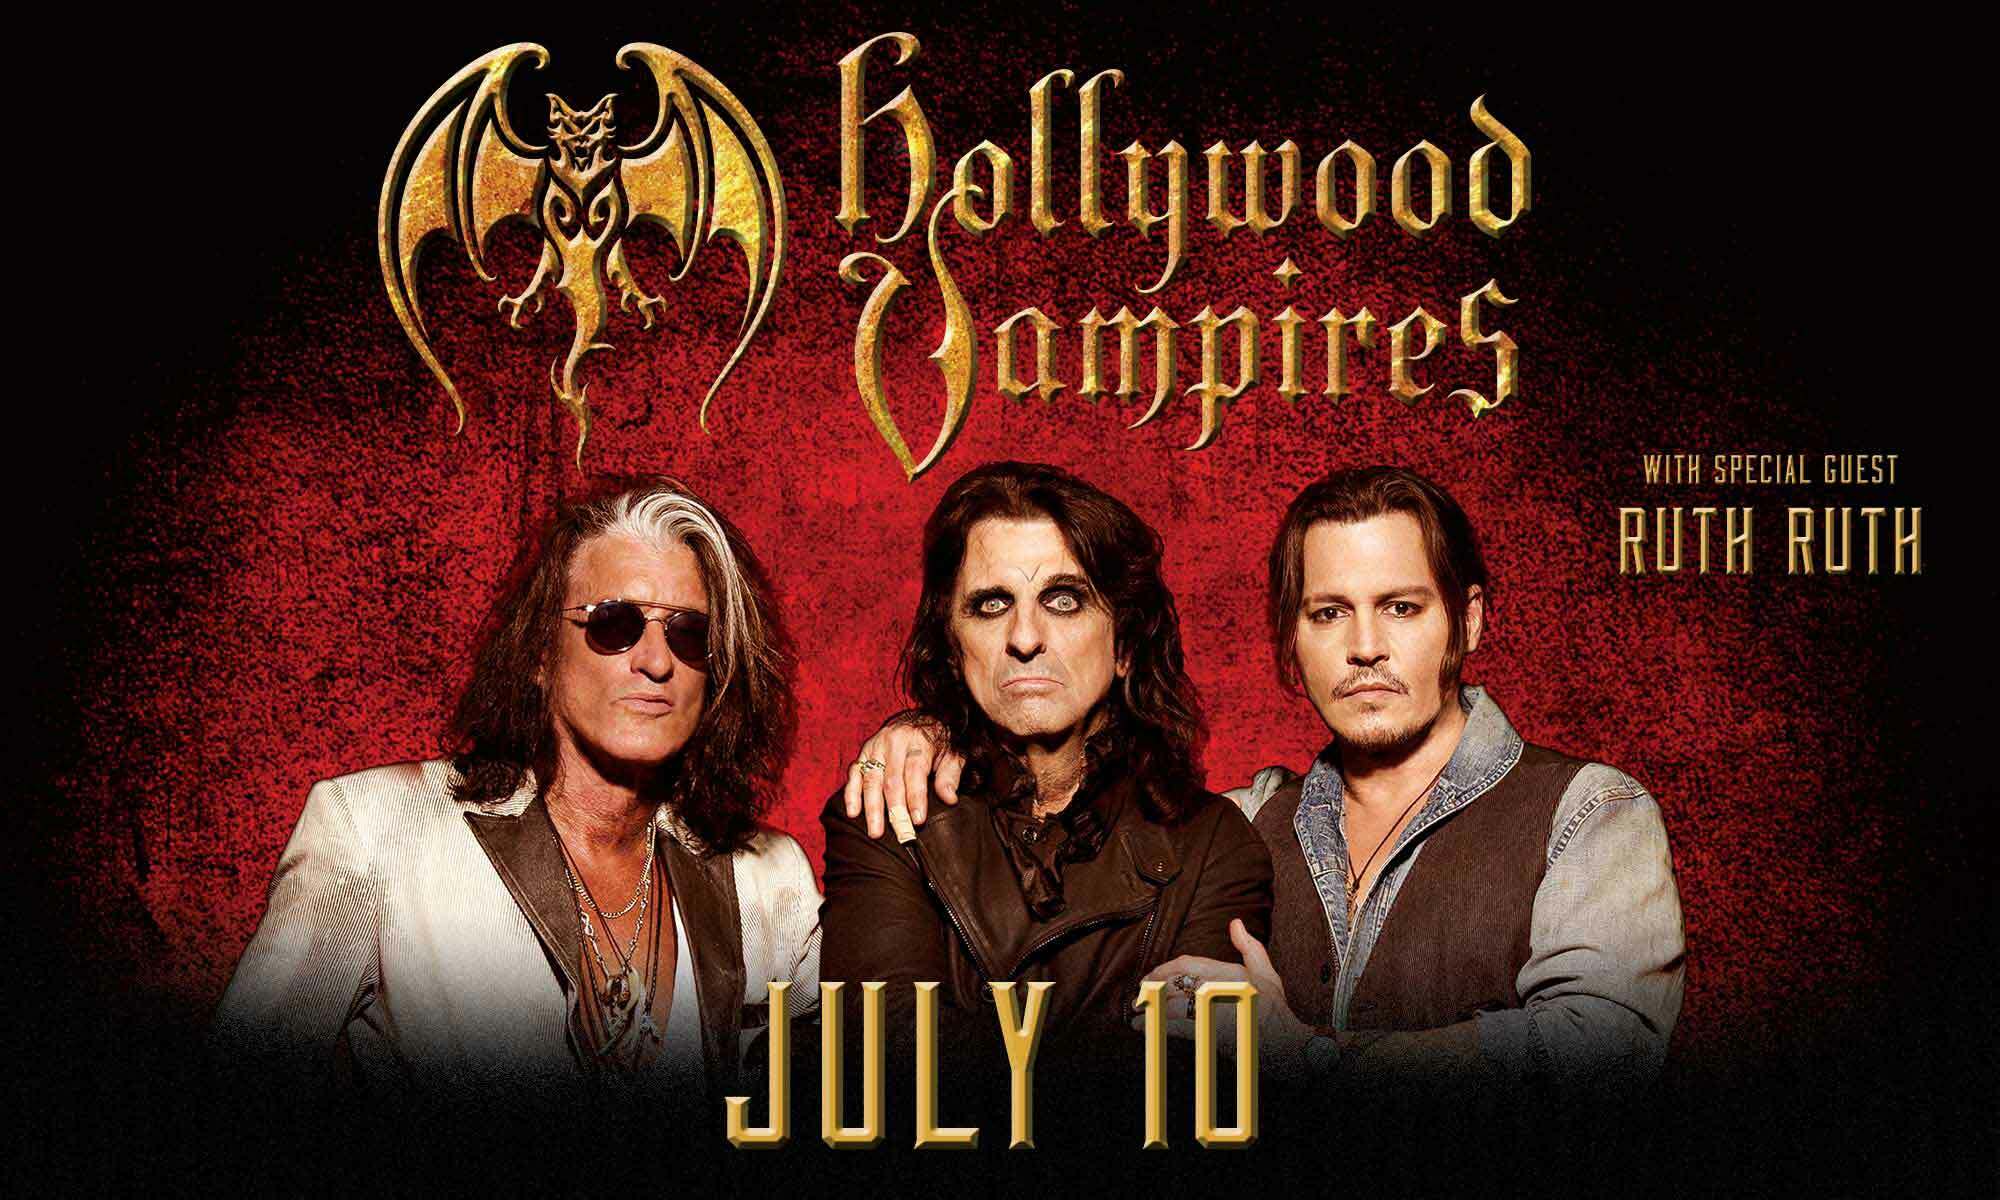 Hollywood Vampires Live Concert